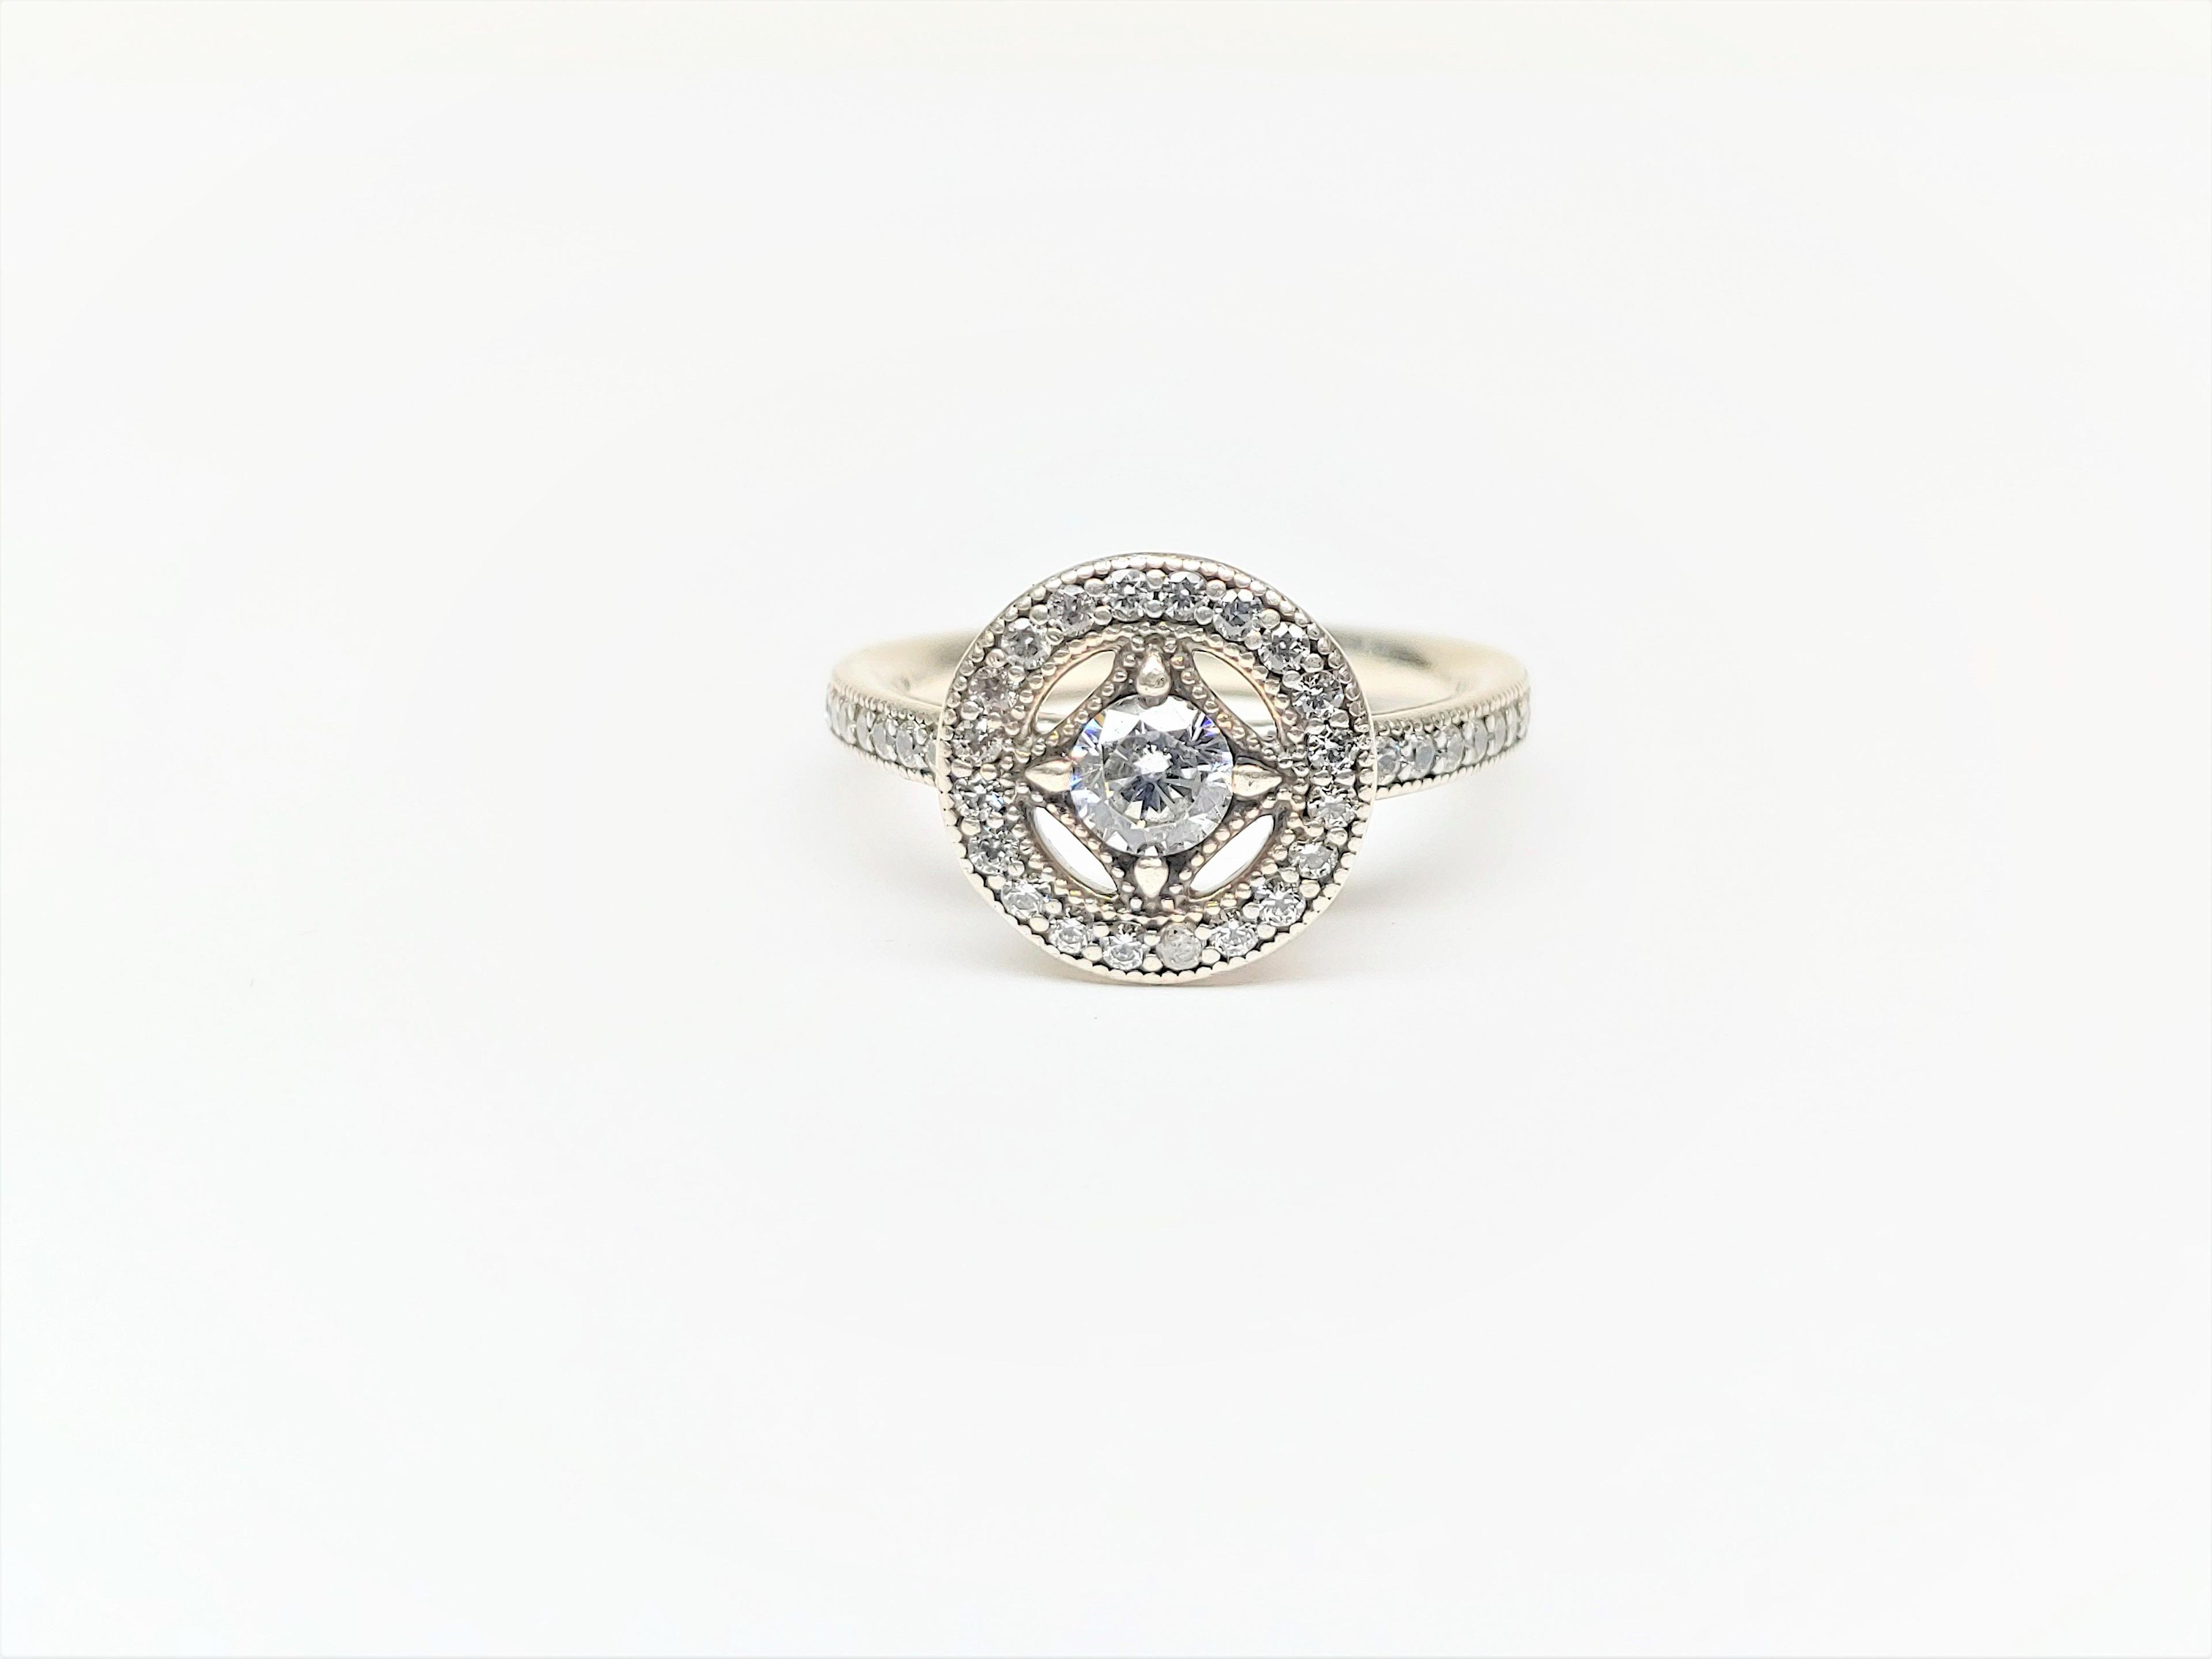 Designer Pandoran Woman's Vintage Allure Ring Size 4.5 Silver ALE 925